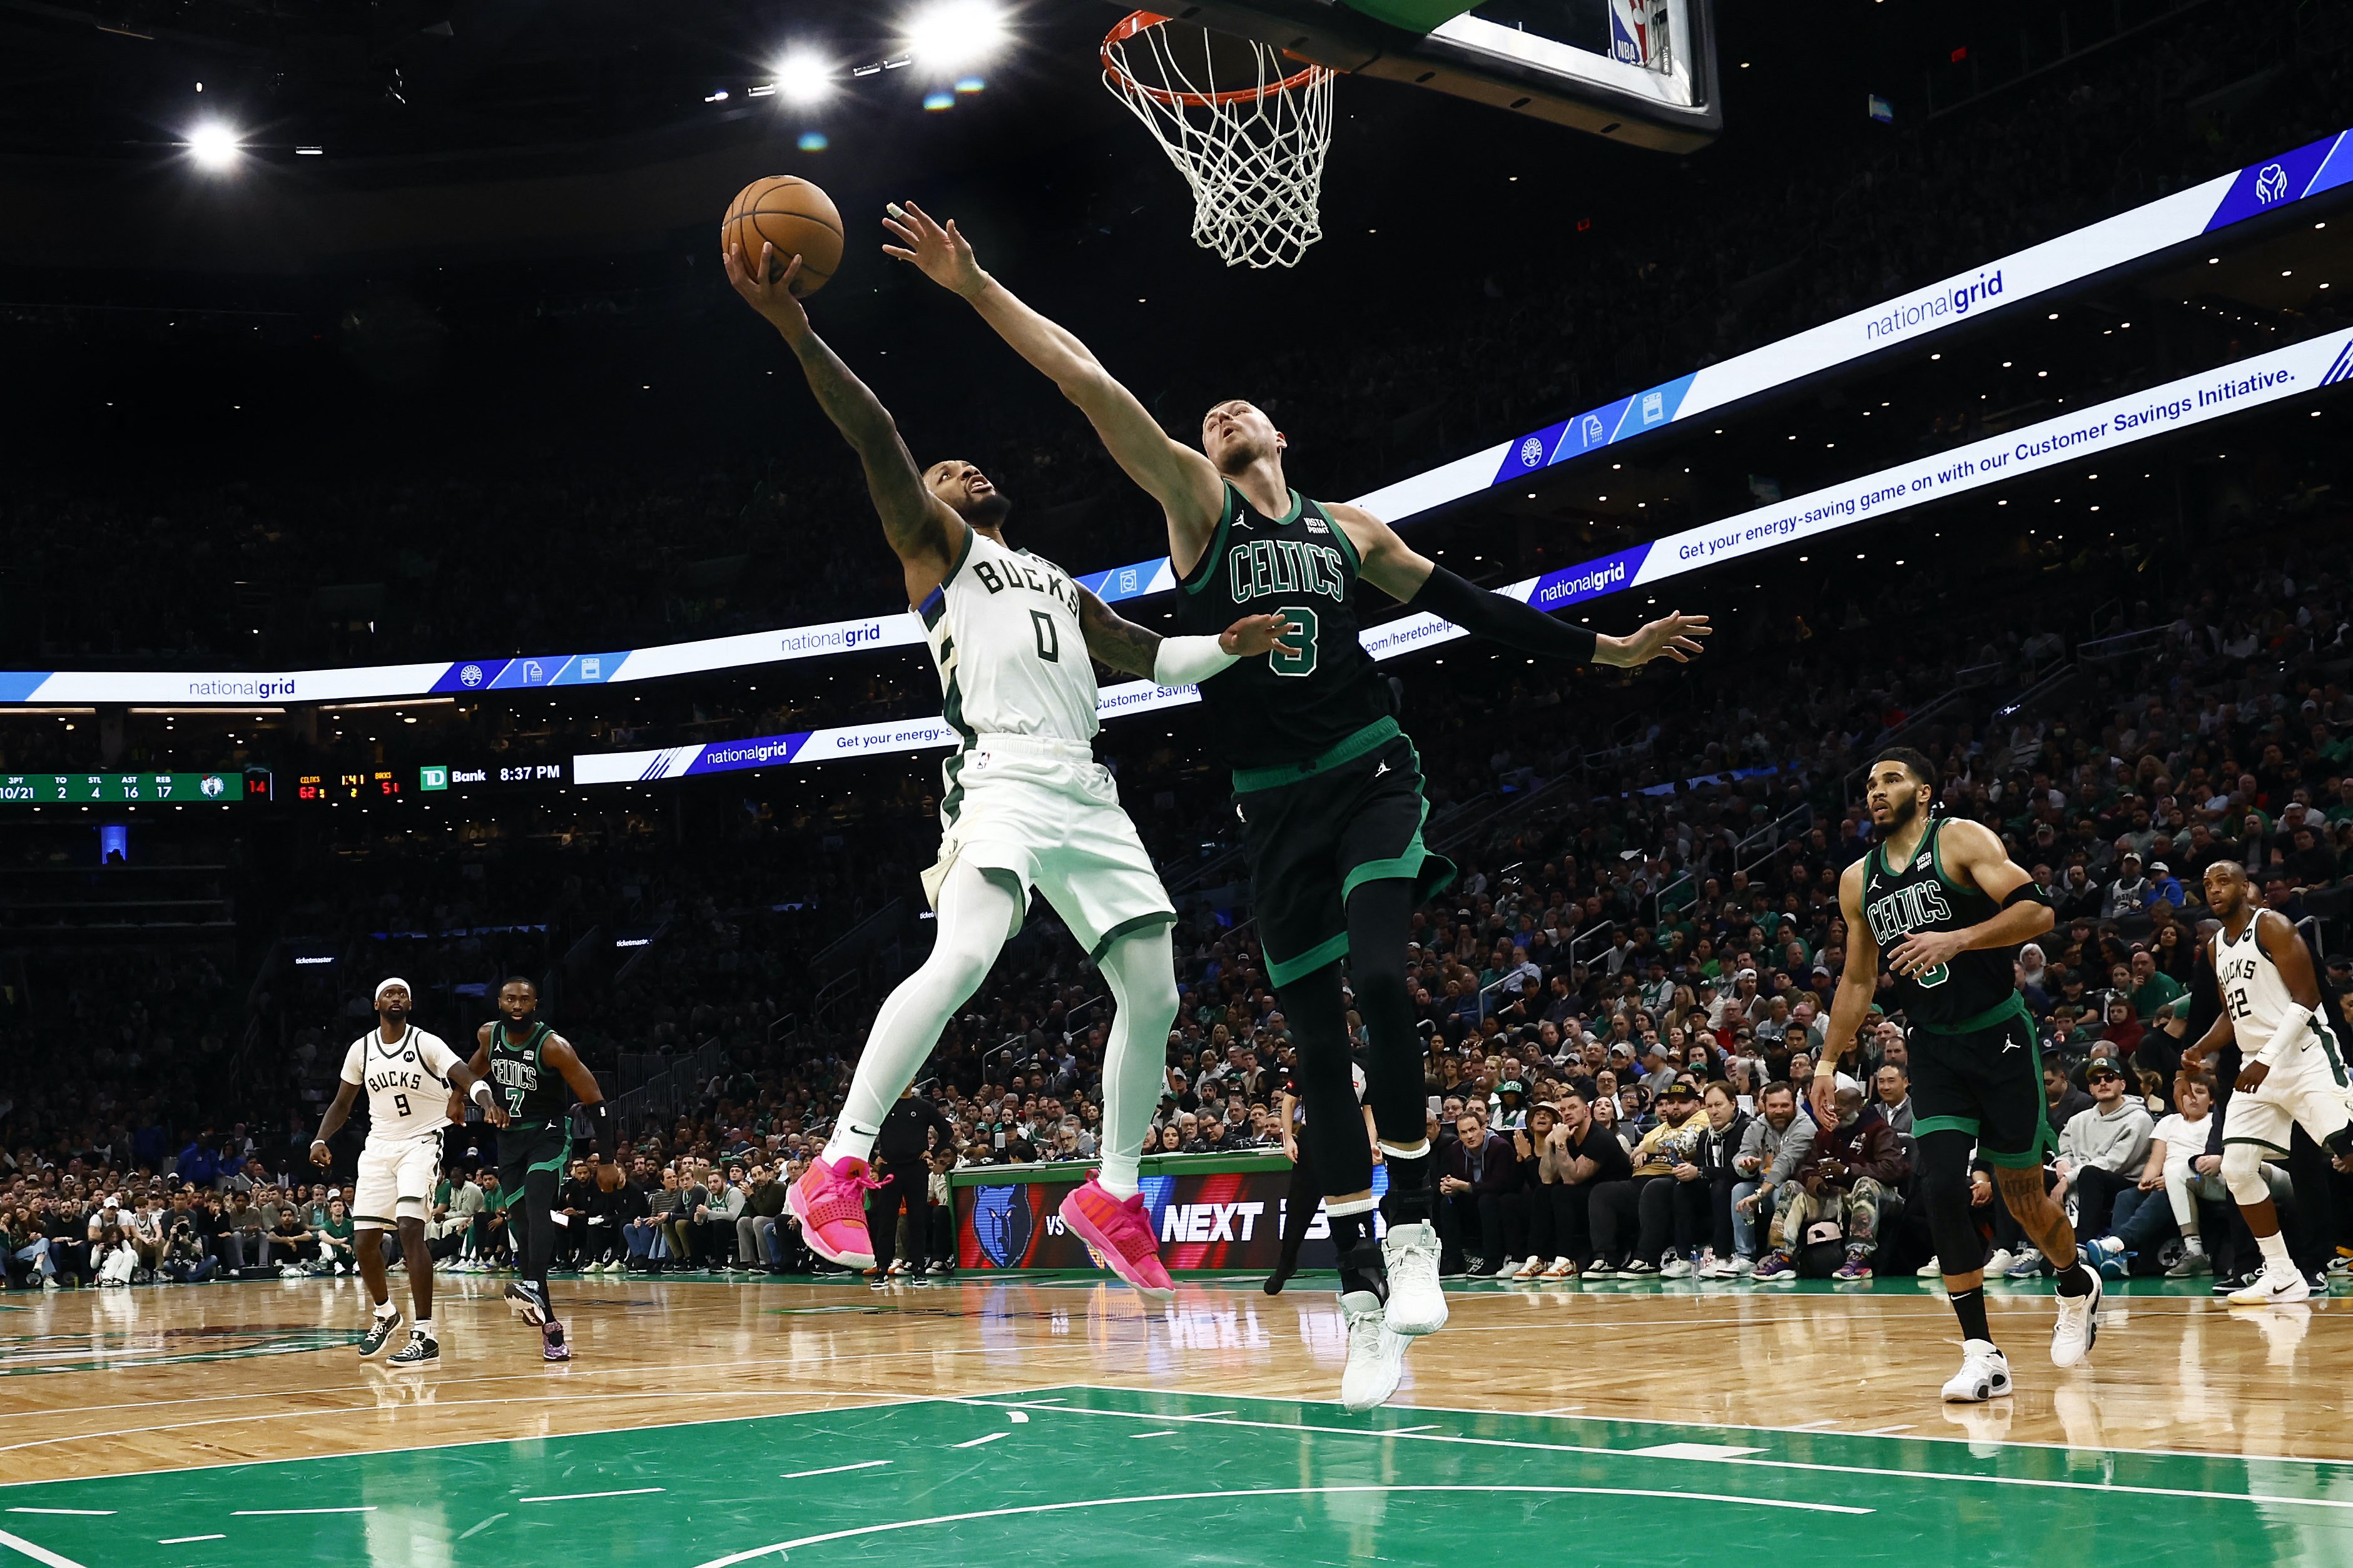 NBA roundup: Celtics top Bucks, win 7th straight